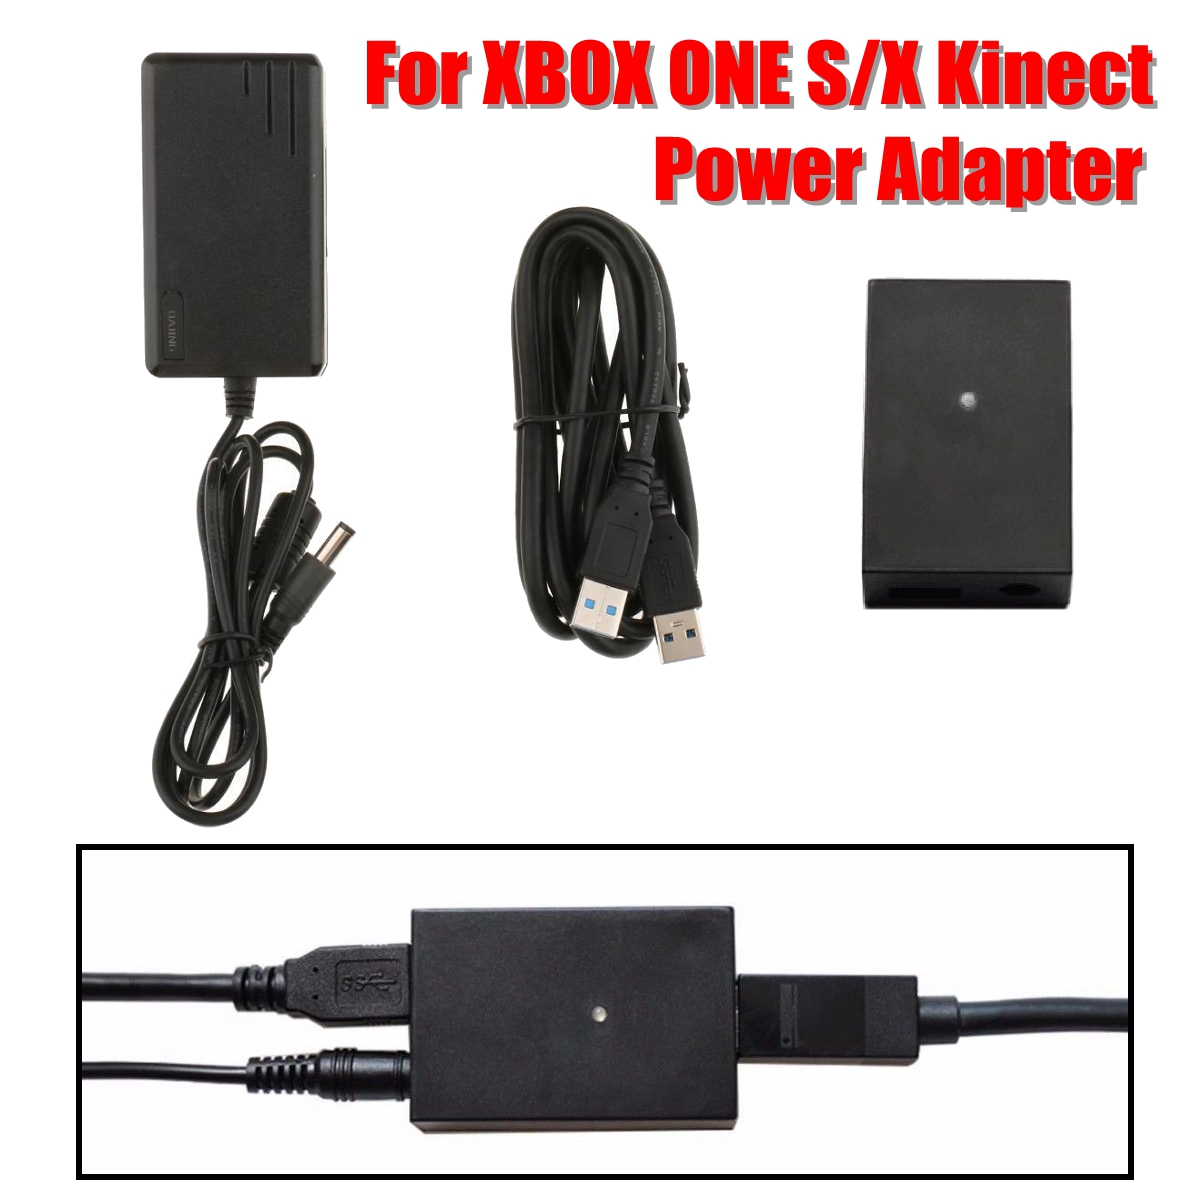 Power-20-Power-AC-Adapter-USEUAU-Plug-PC-Development-Kit-For-Xbox-One-SX-Kinect-1319225-1